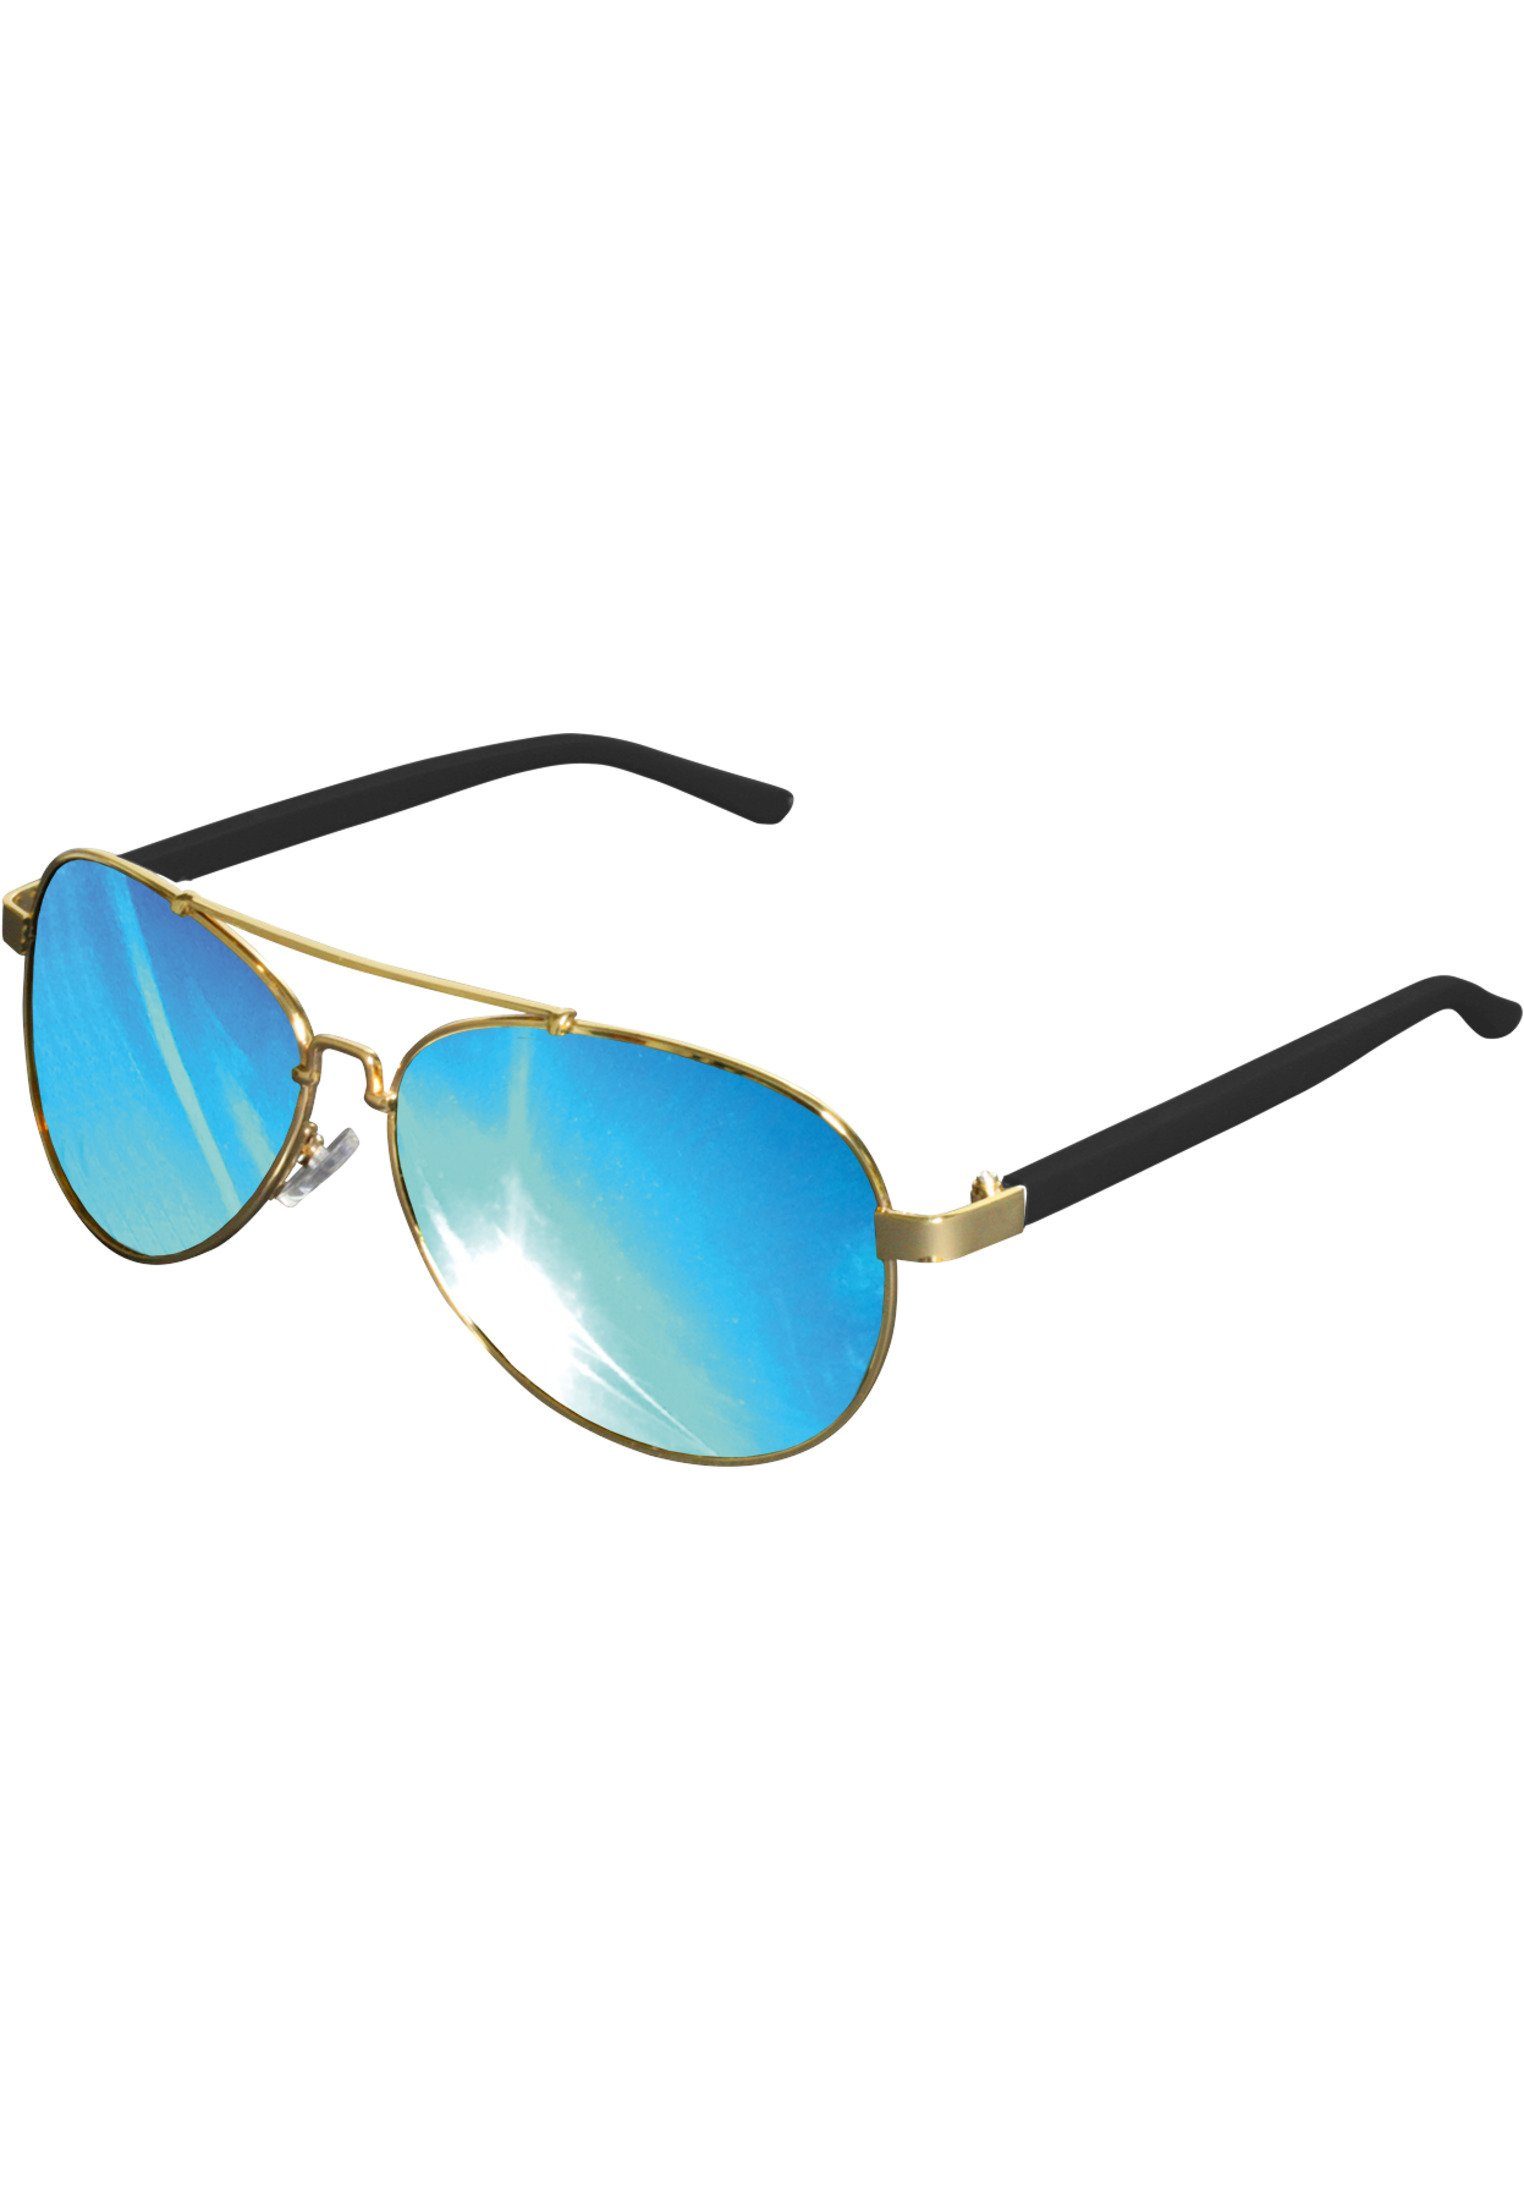 MSTRDS Sonnenbrille Accessoires Sunglasses Mumbo gold/blue Mirror